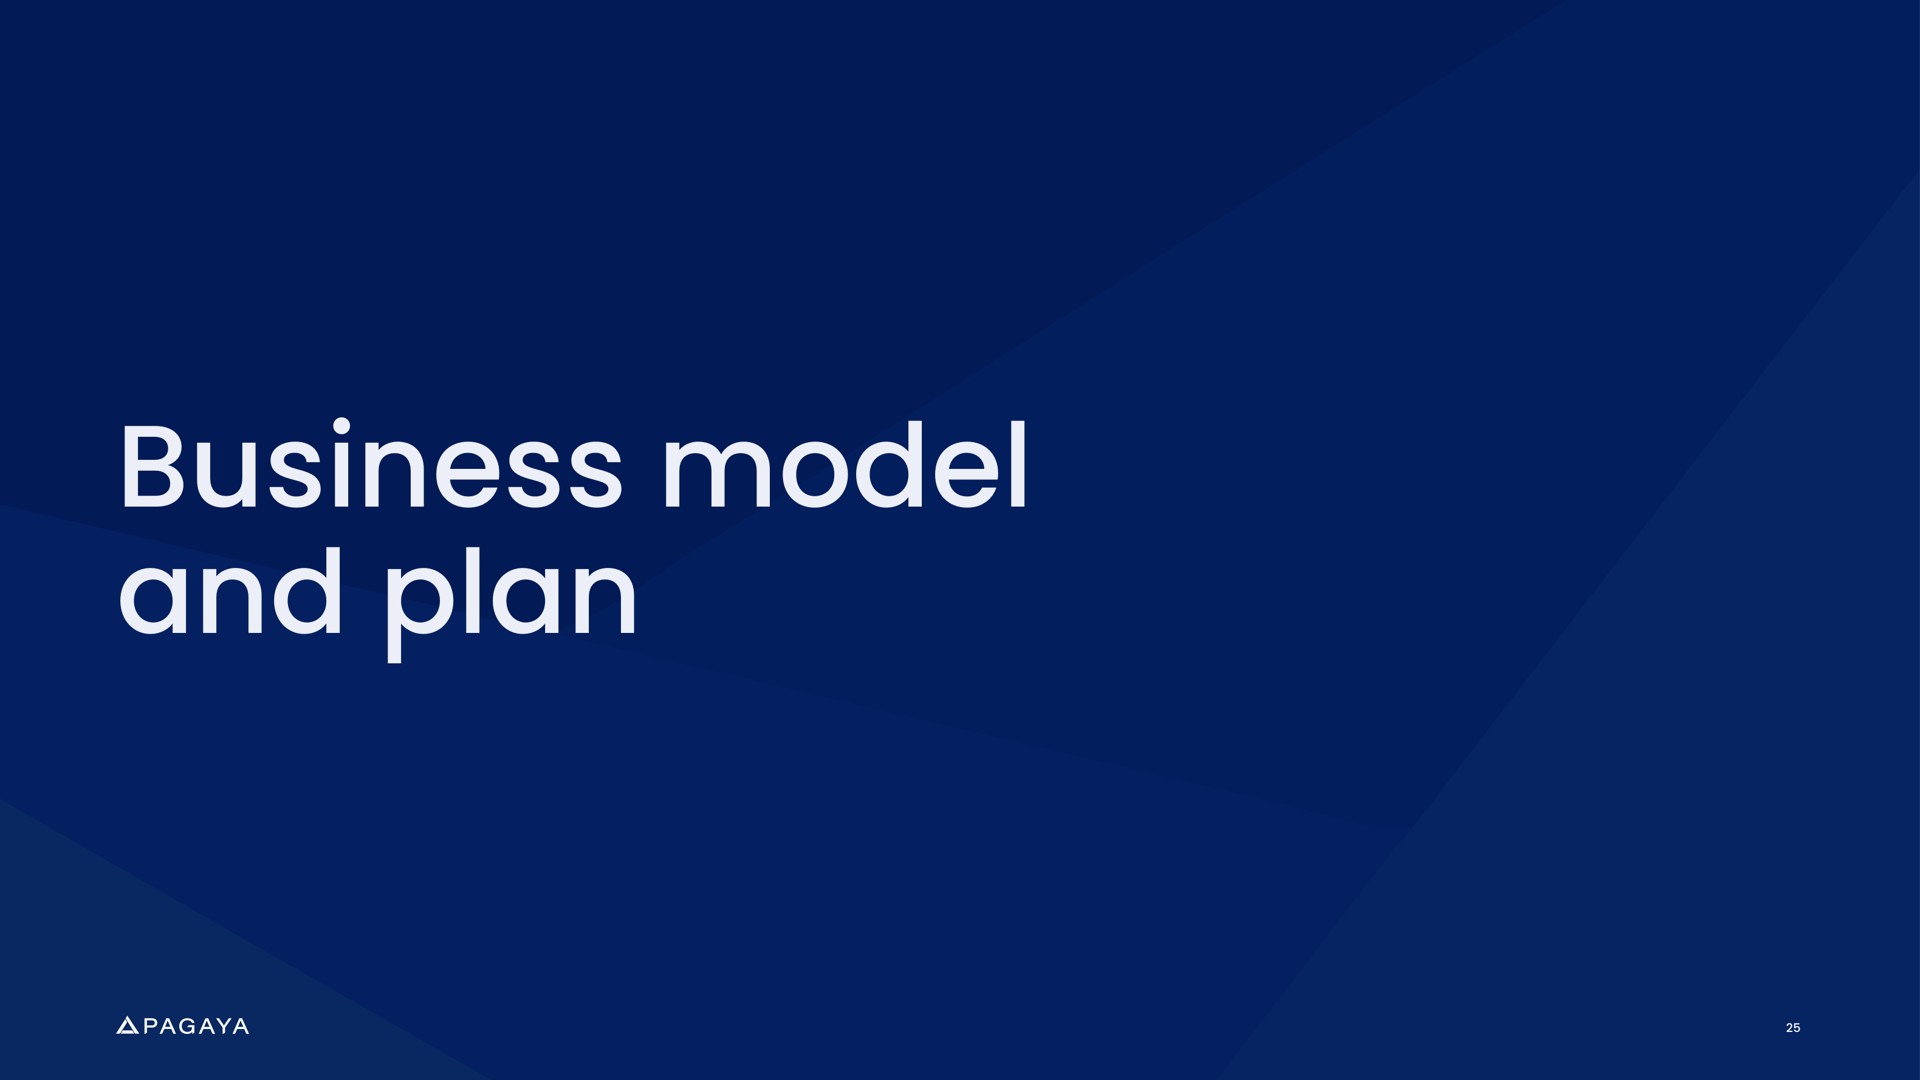 business model and plan | Pagaya